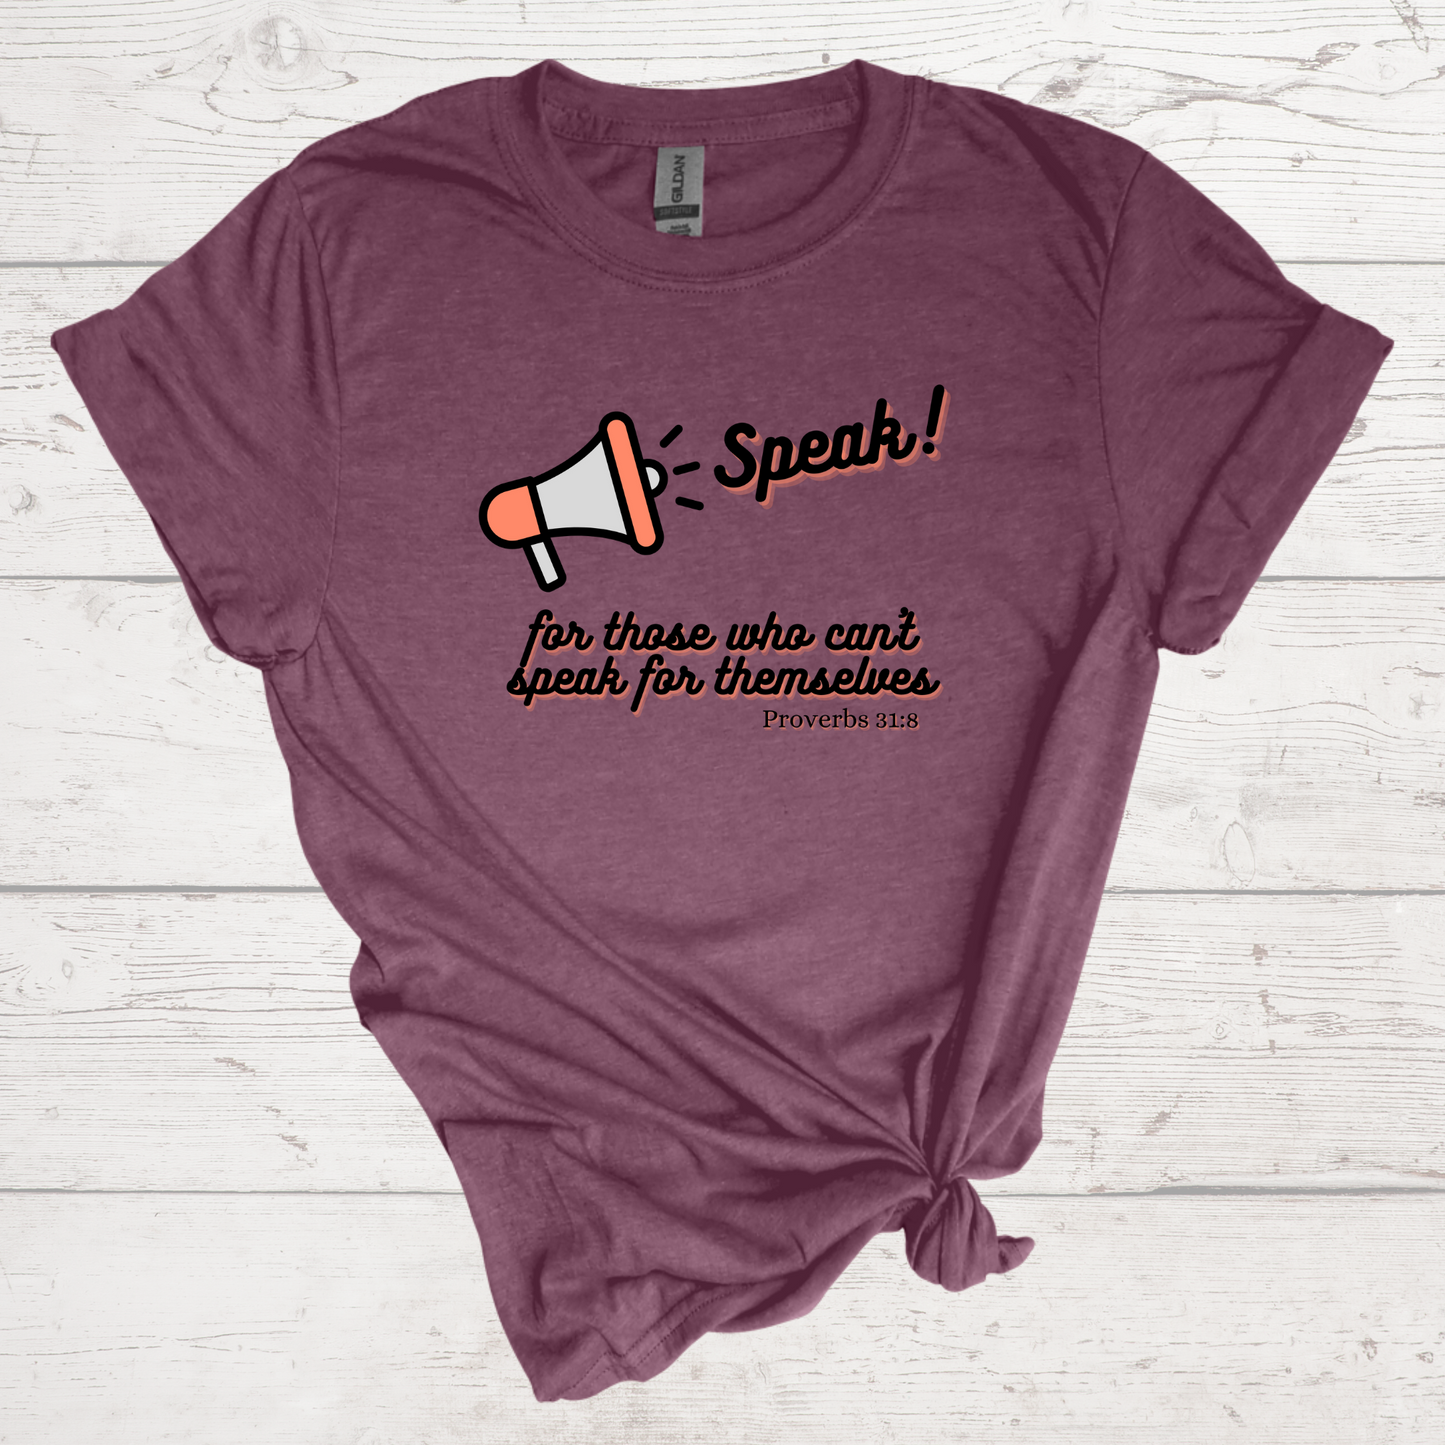 Speak! Shirt